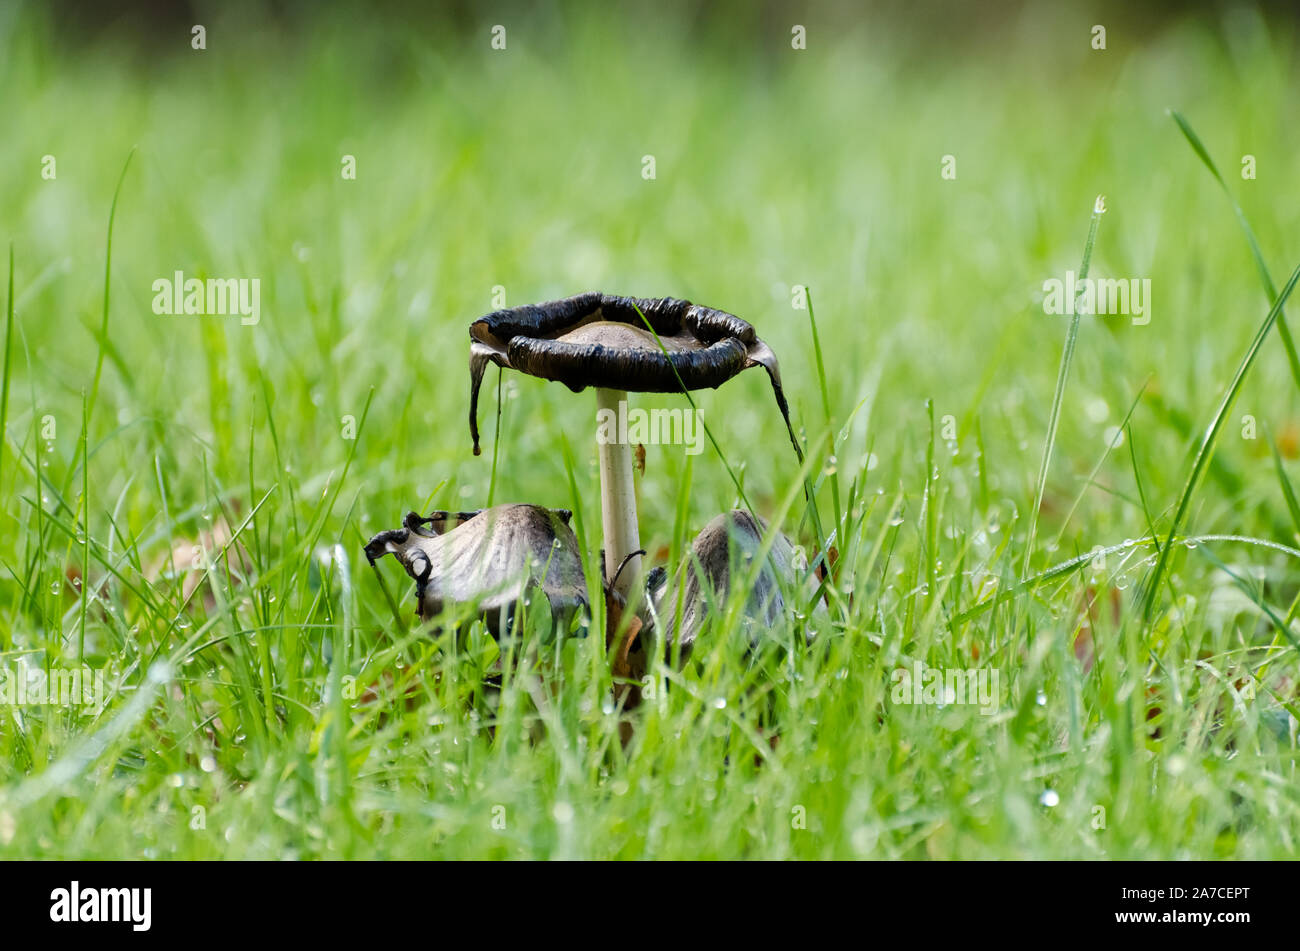 Lacrymaria lacrymabunda, fungi mushrooms in the grass in a forest in Germany, Western Europe Stock Photo